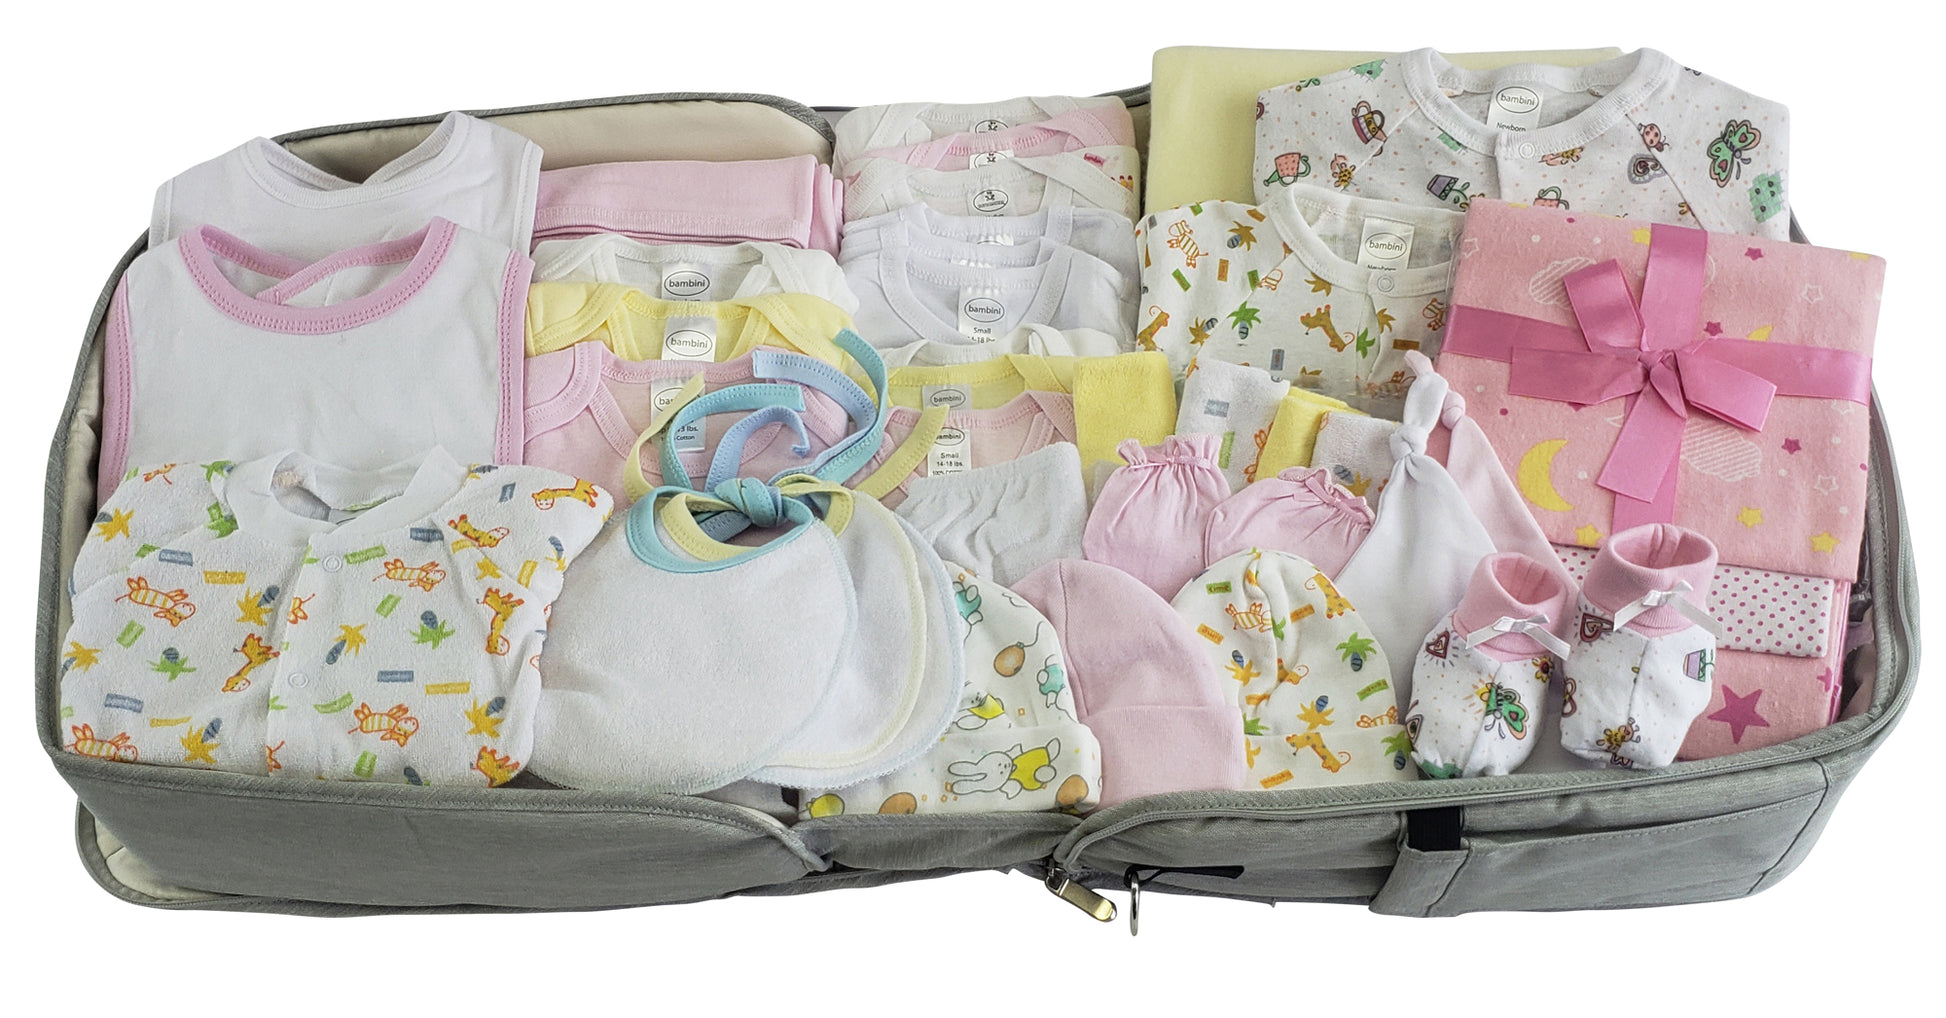 Girls 44 pc Baby Clothing Starter Set with Diaper Bag 808-44-Set